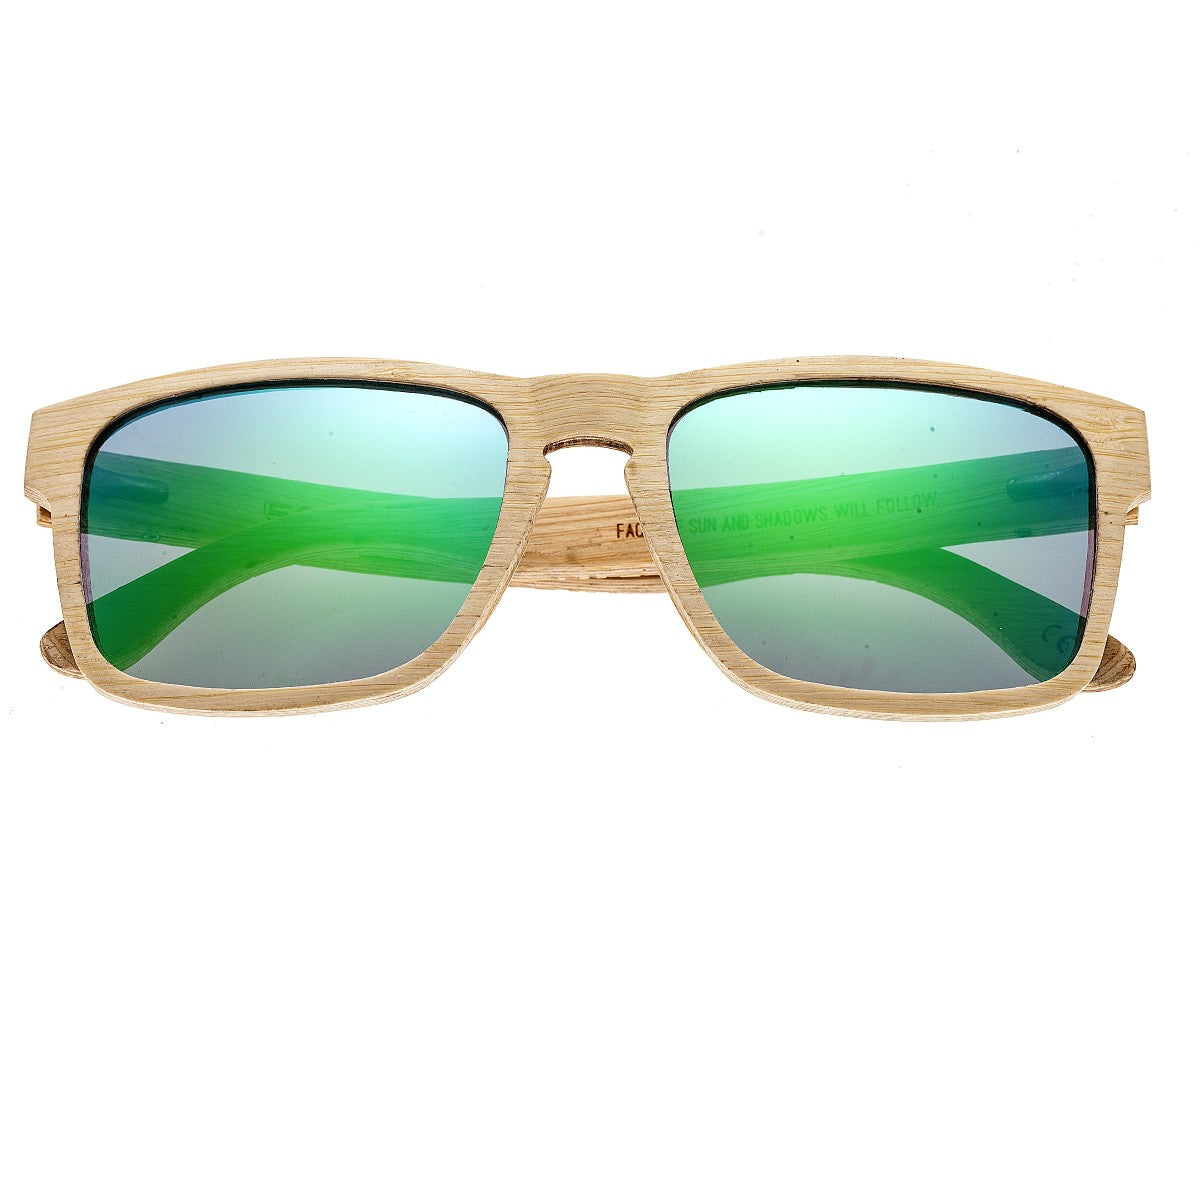 Earth Wood Whitehaven Unisex Sunglasses Bamboo Frame Green-Blue